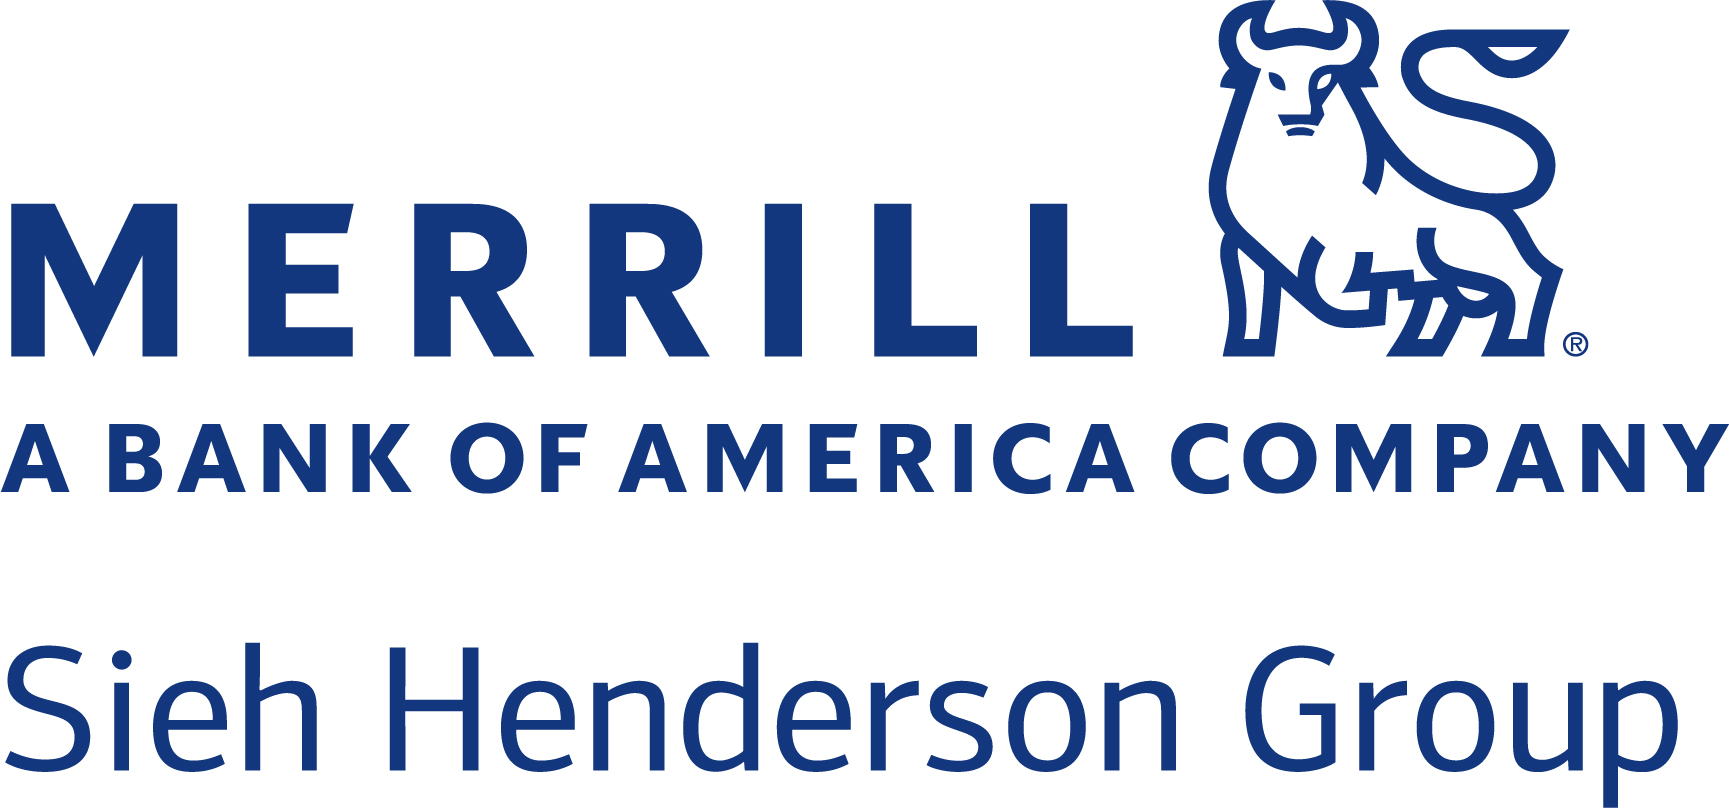 Merrill A Bank of America Company Sieh Henderson Group Logo